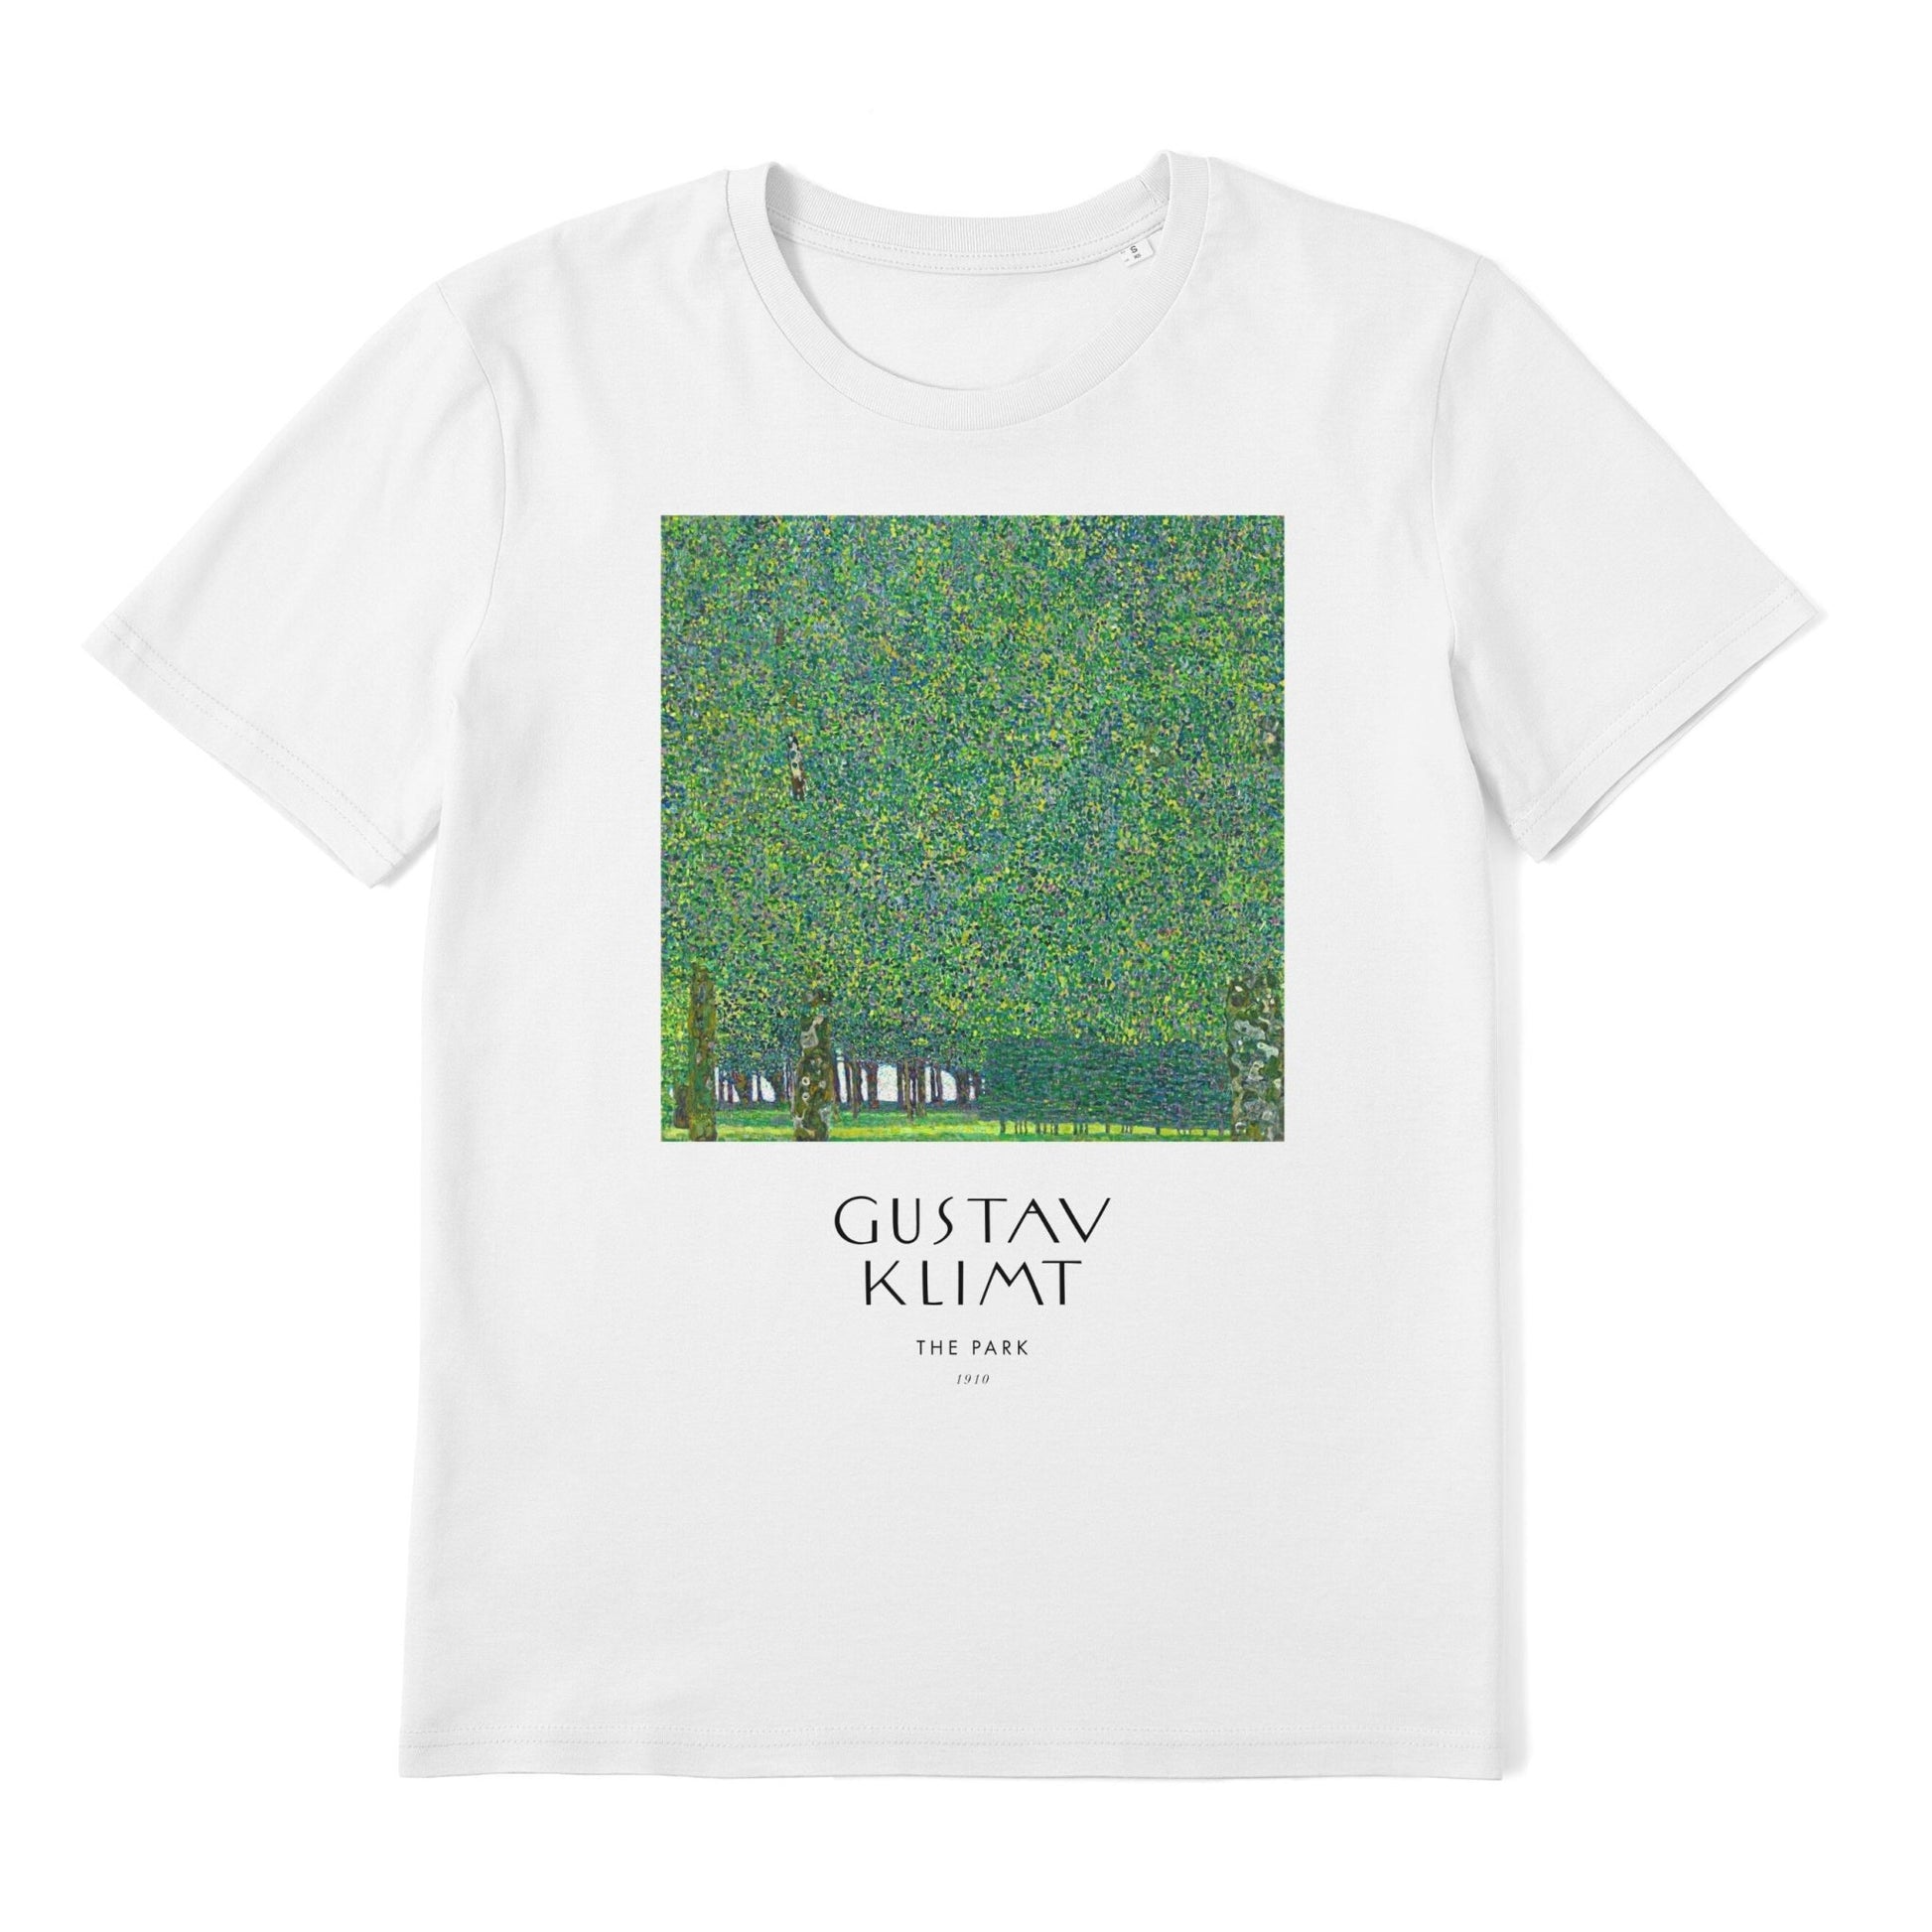 GUSTAV KLIMT - The Park T-Shirt - Pathos Studio - T-Shirts